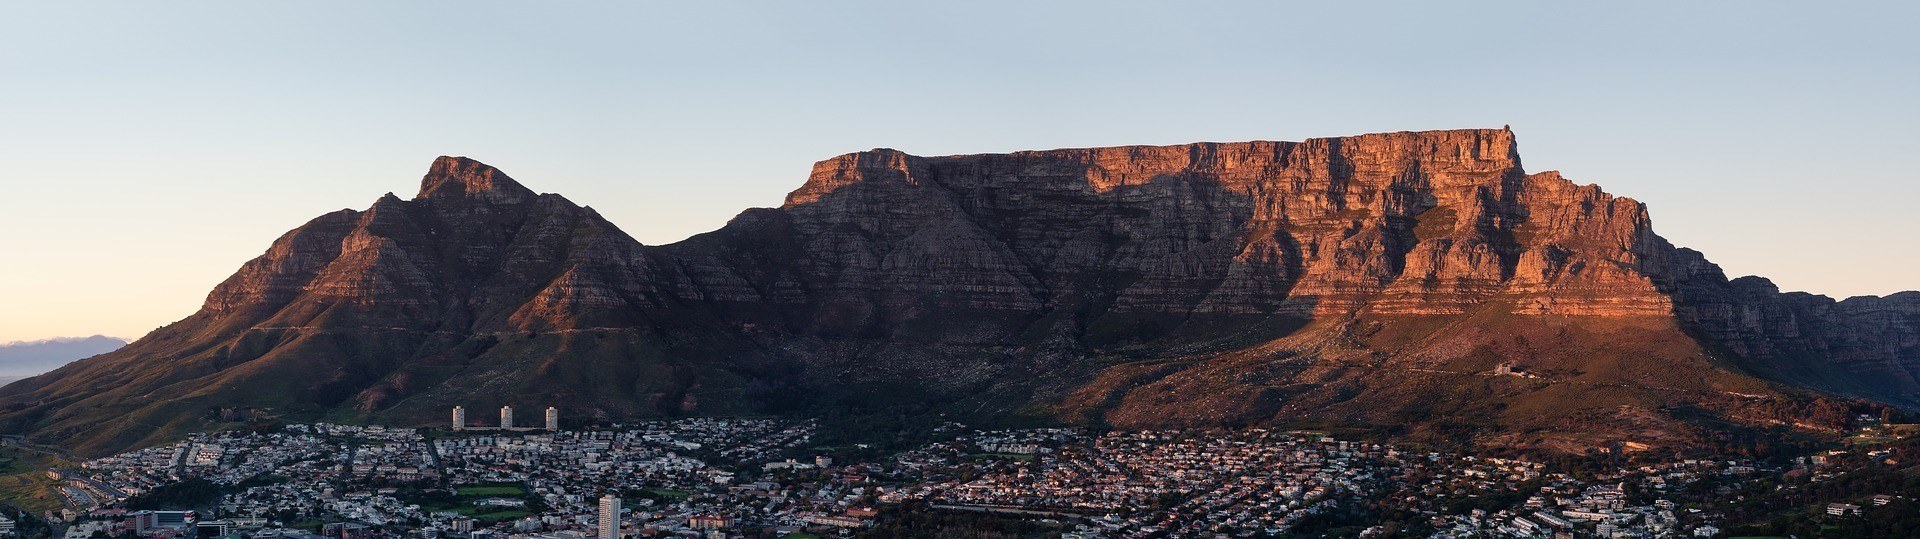 Panorama Kapstadt-Tafelberg